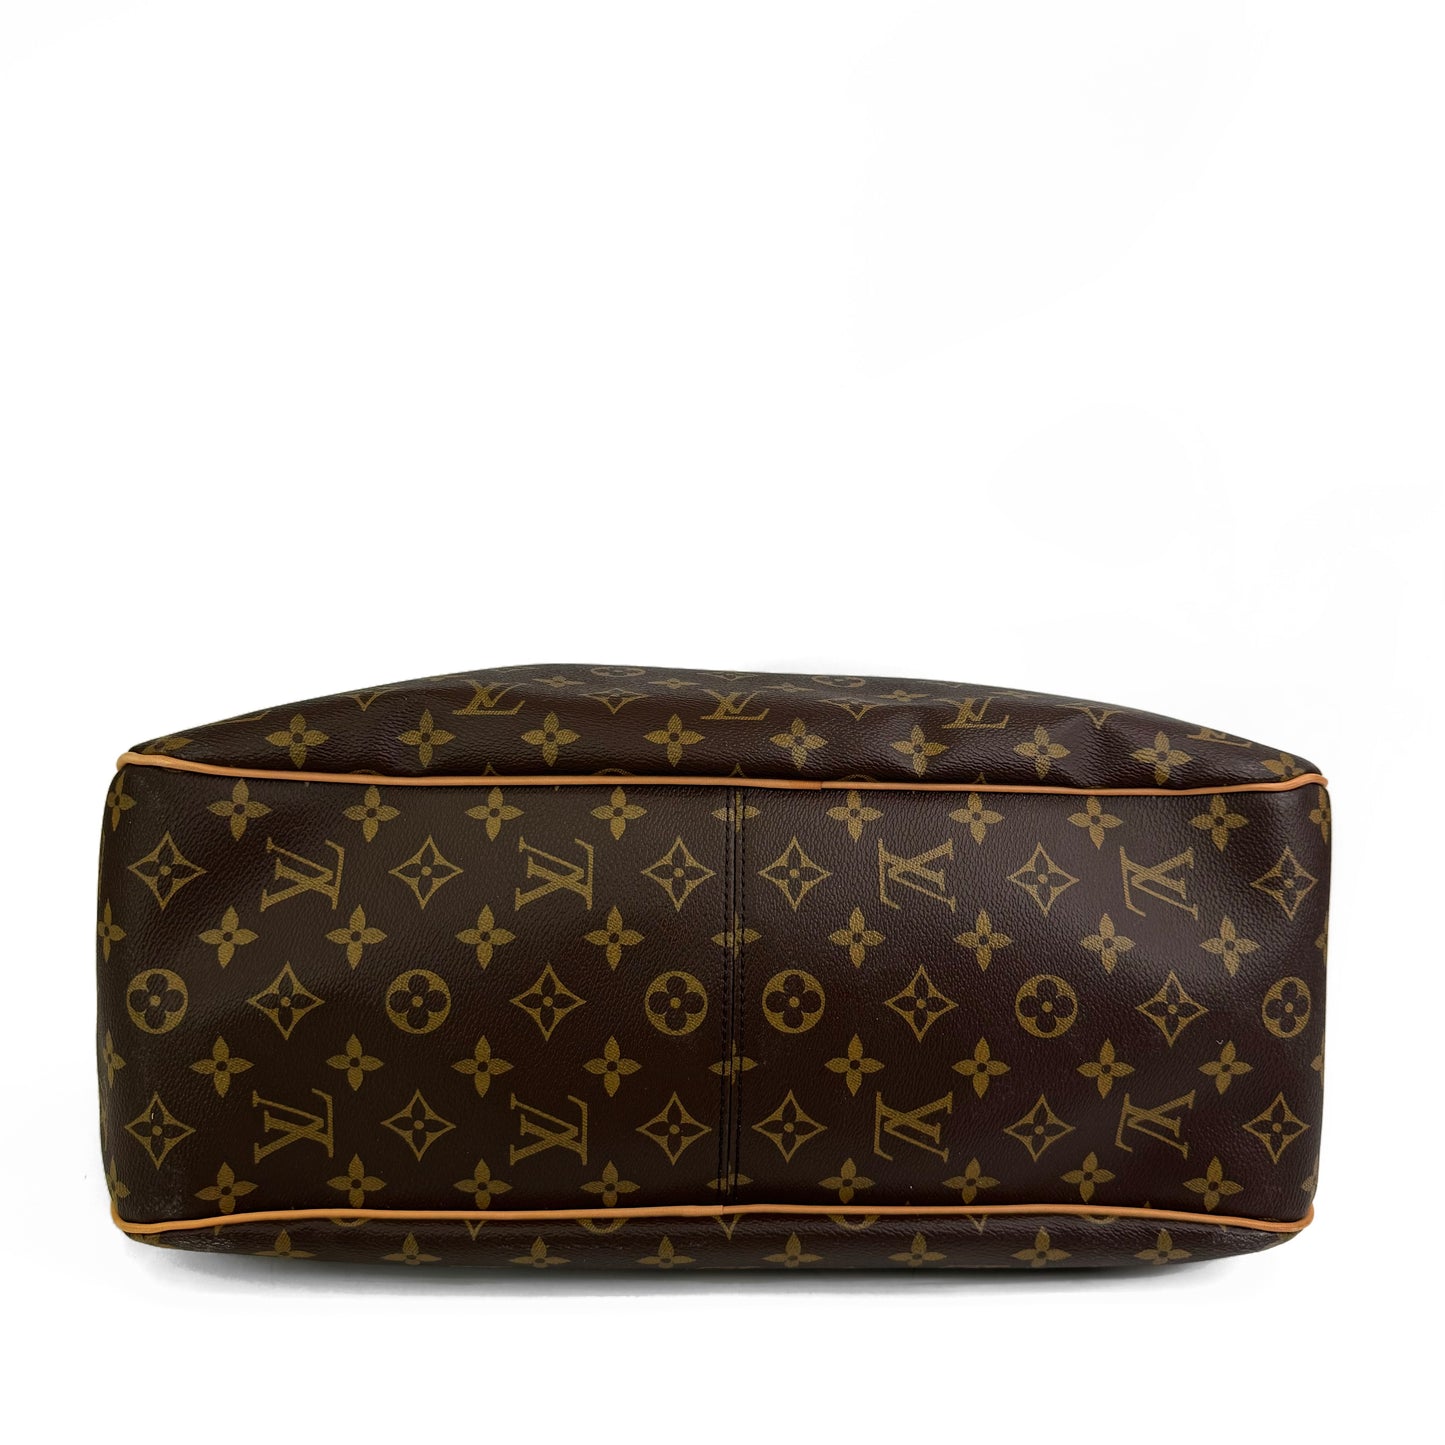 Louis Vuitton Delightful Monogram MM Bag